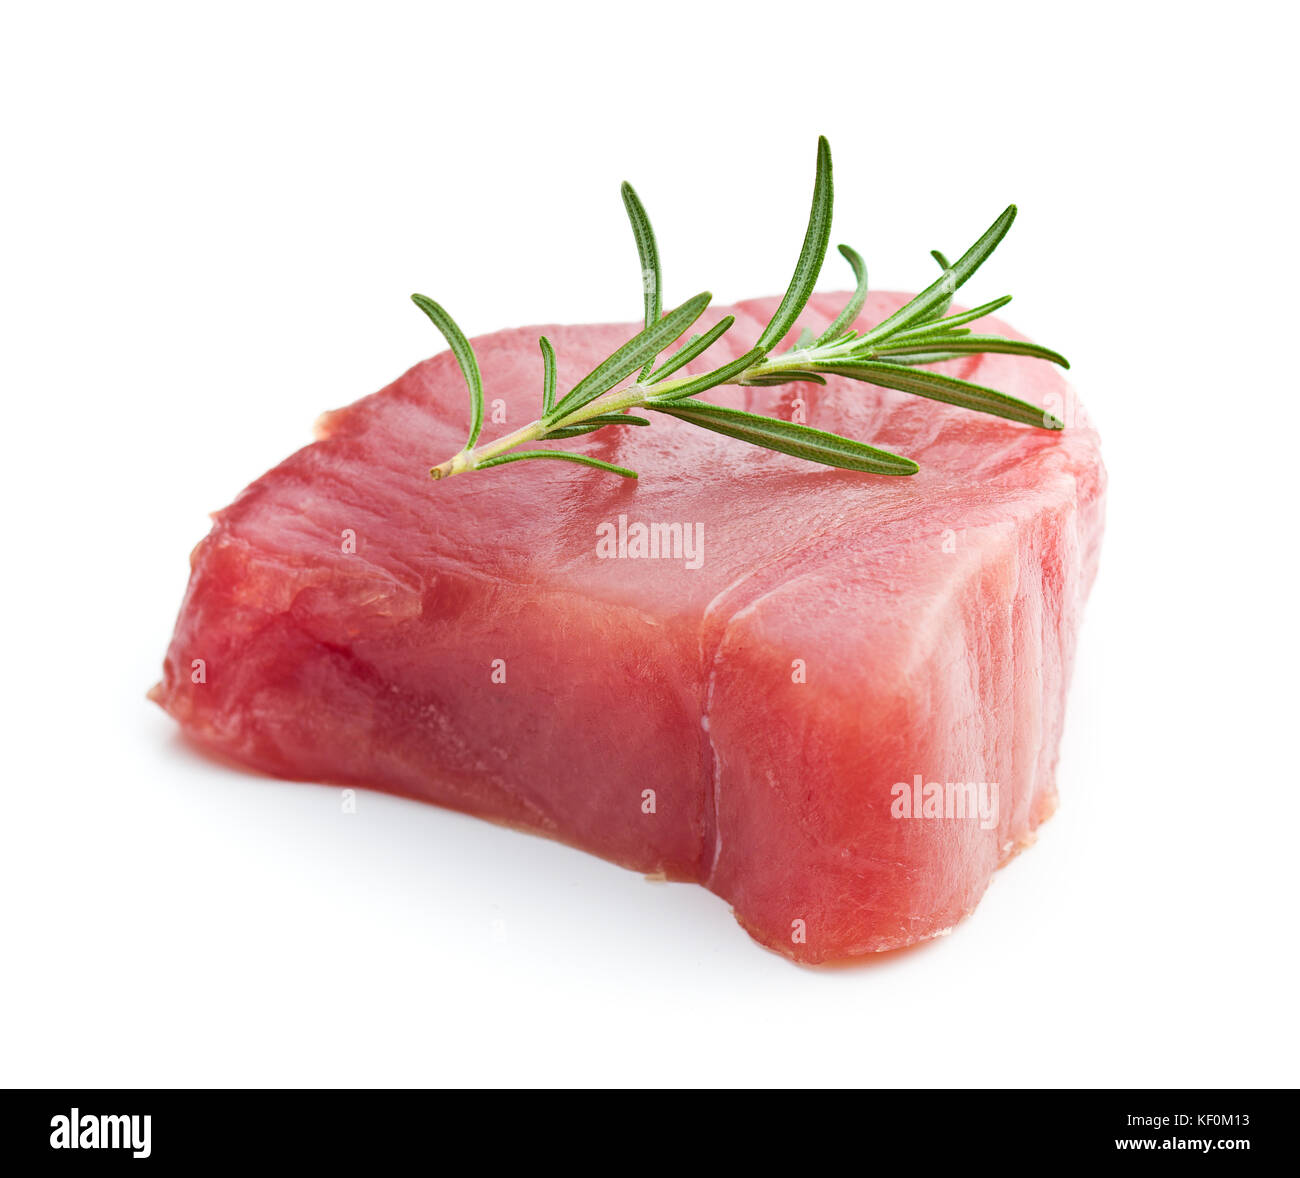 https://c8.alamy.com/comp/KF0M13/fresh-raw-tuna-steak-and-rosemary-isolated-on-white-background-KF0M13.jpg